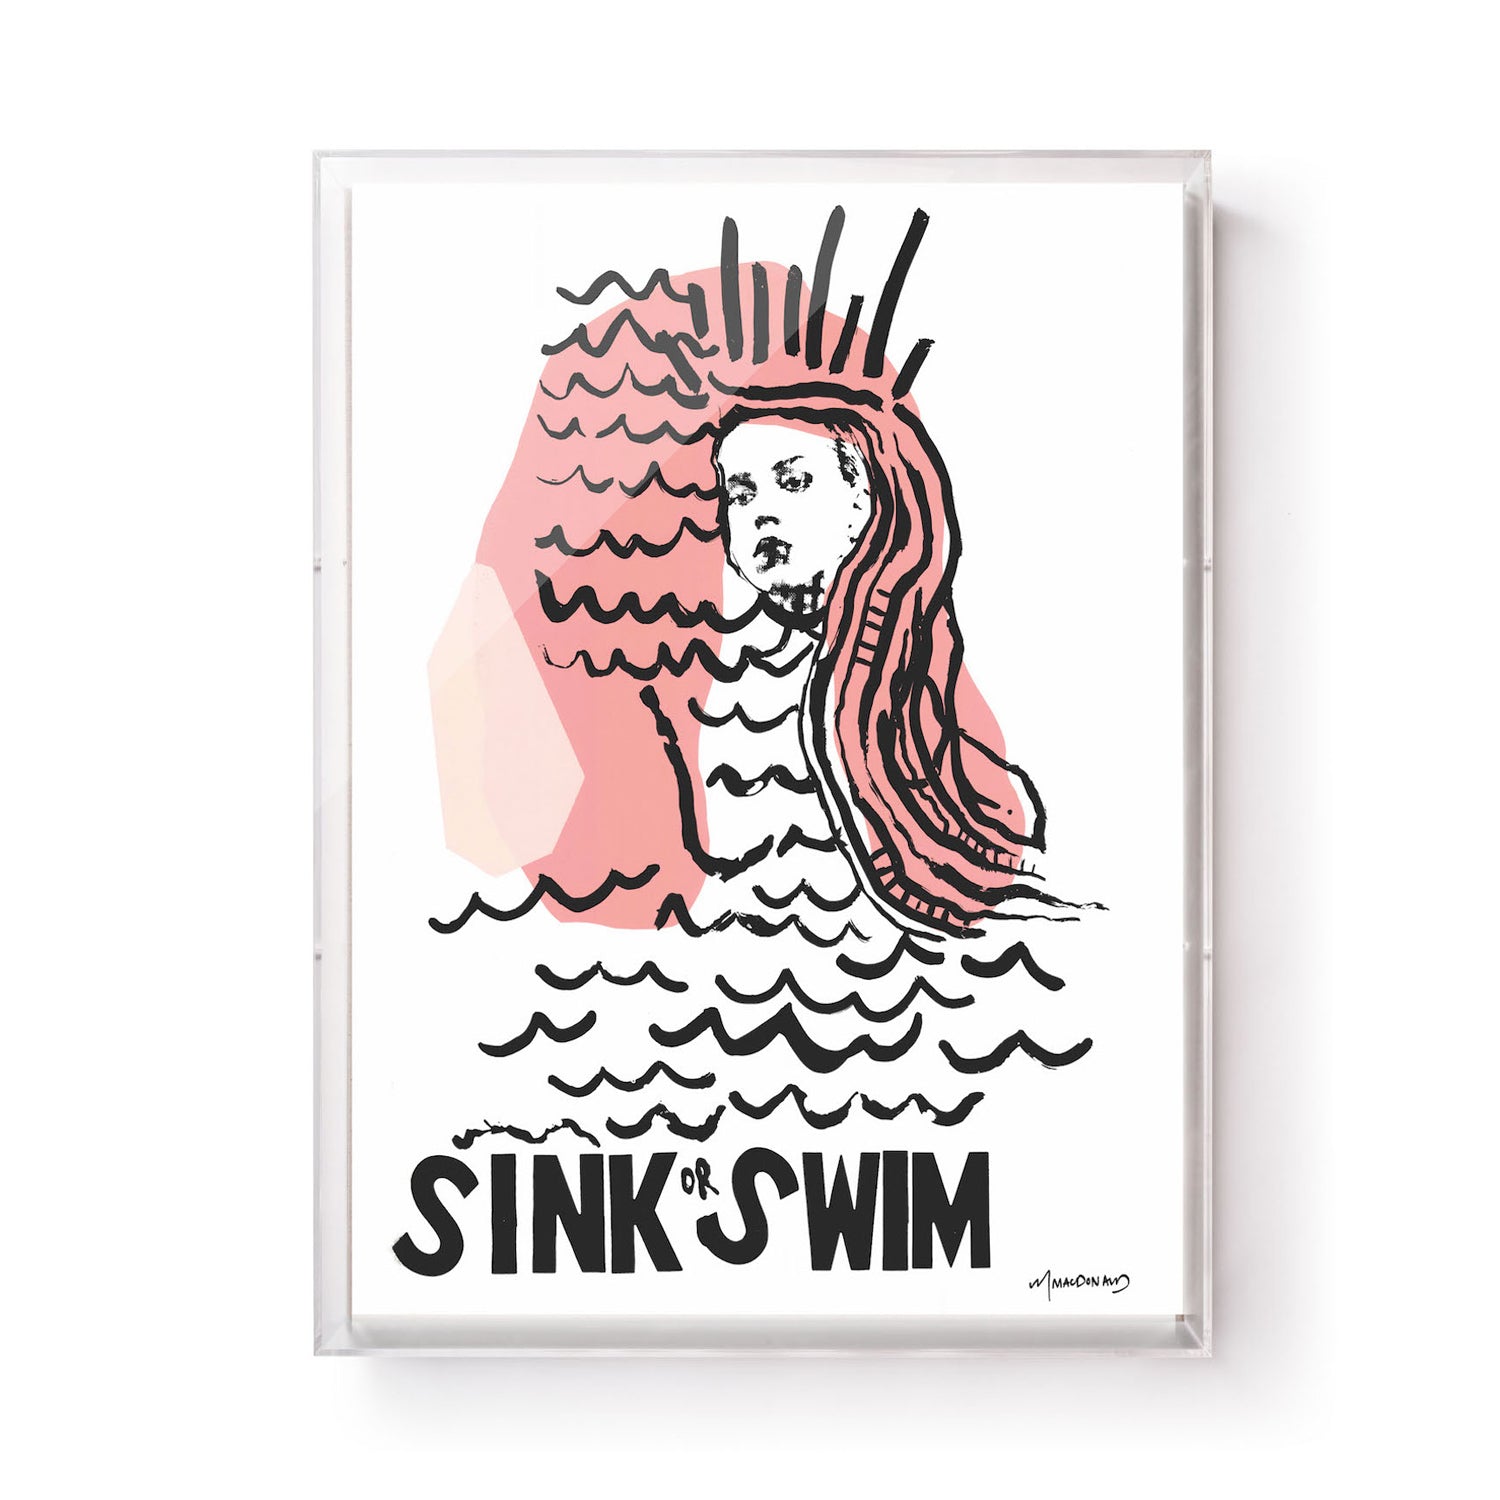 Sink or Swim by Maggie Macdonald